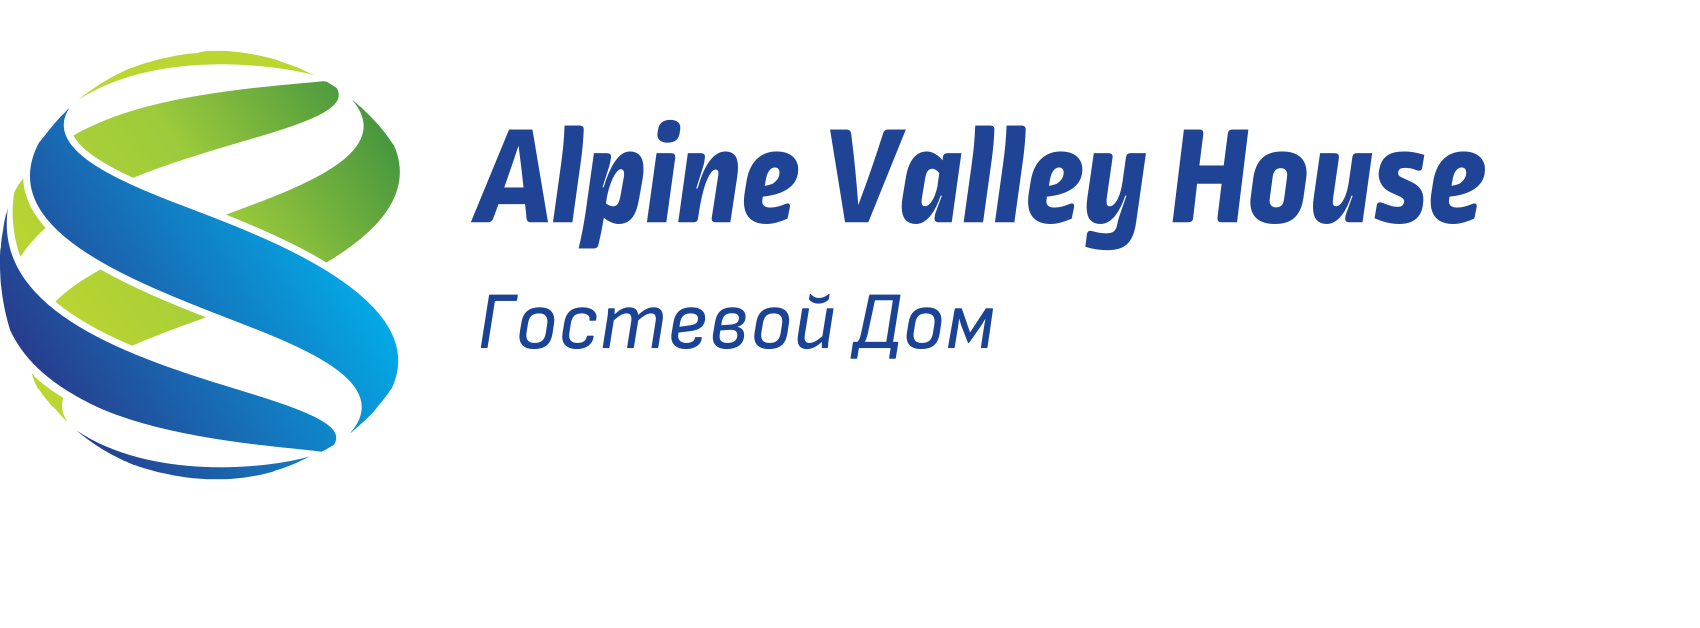 Alpine Valley House